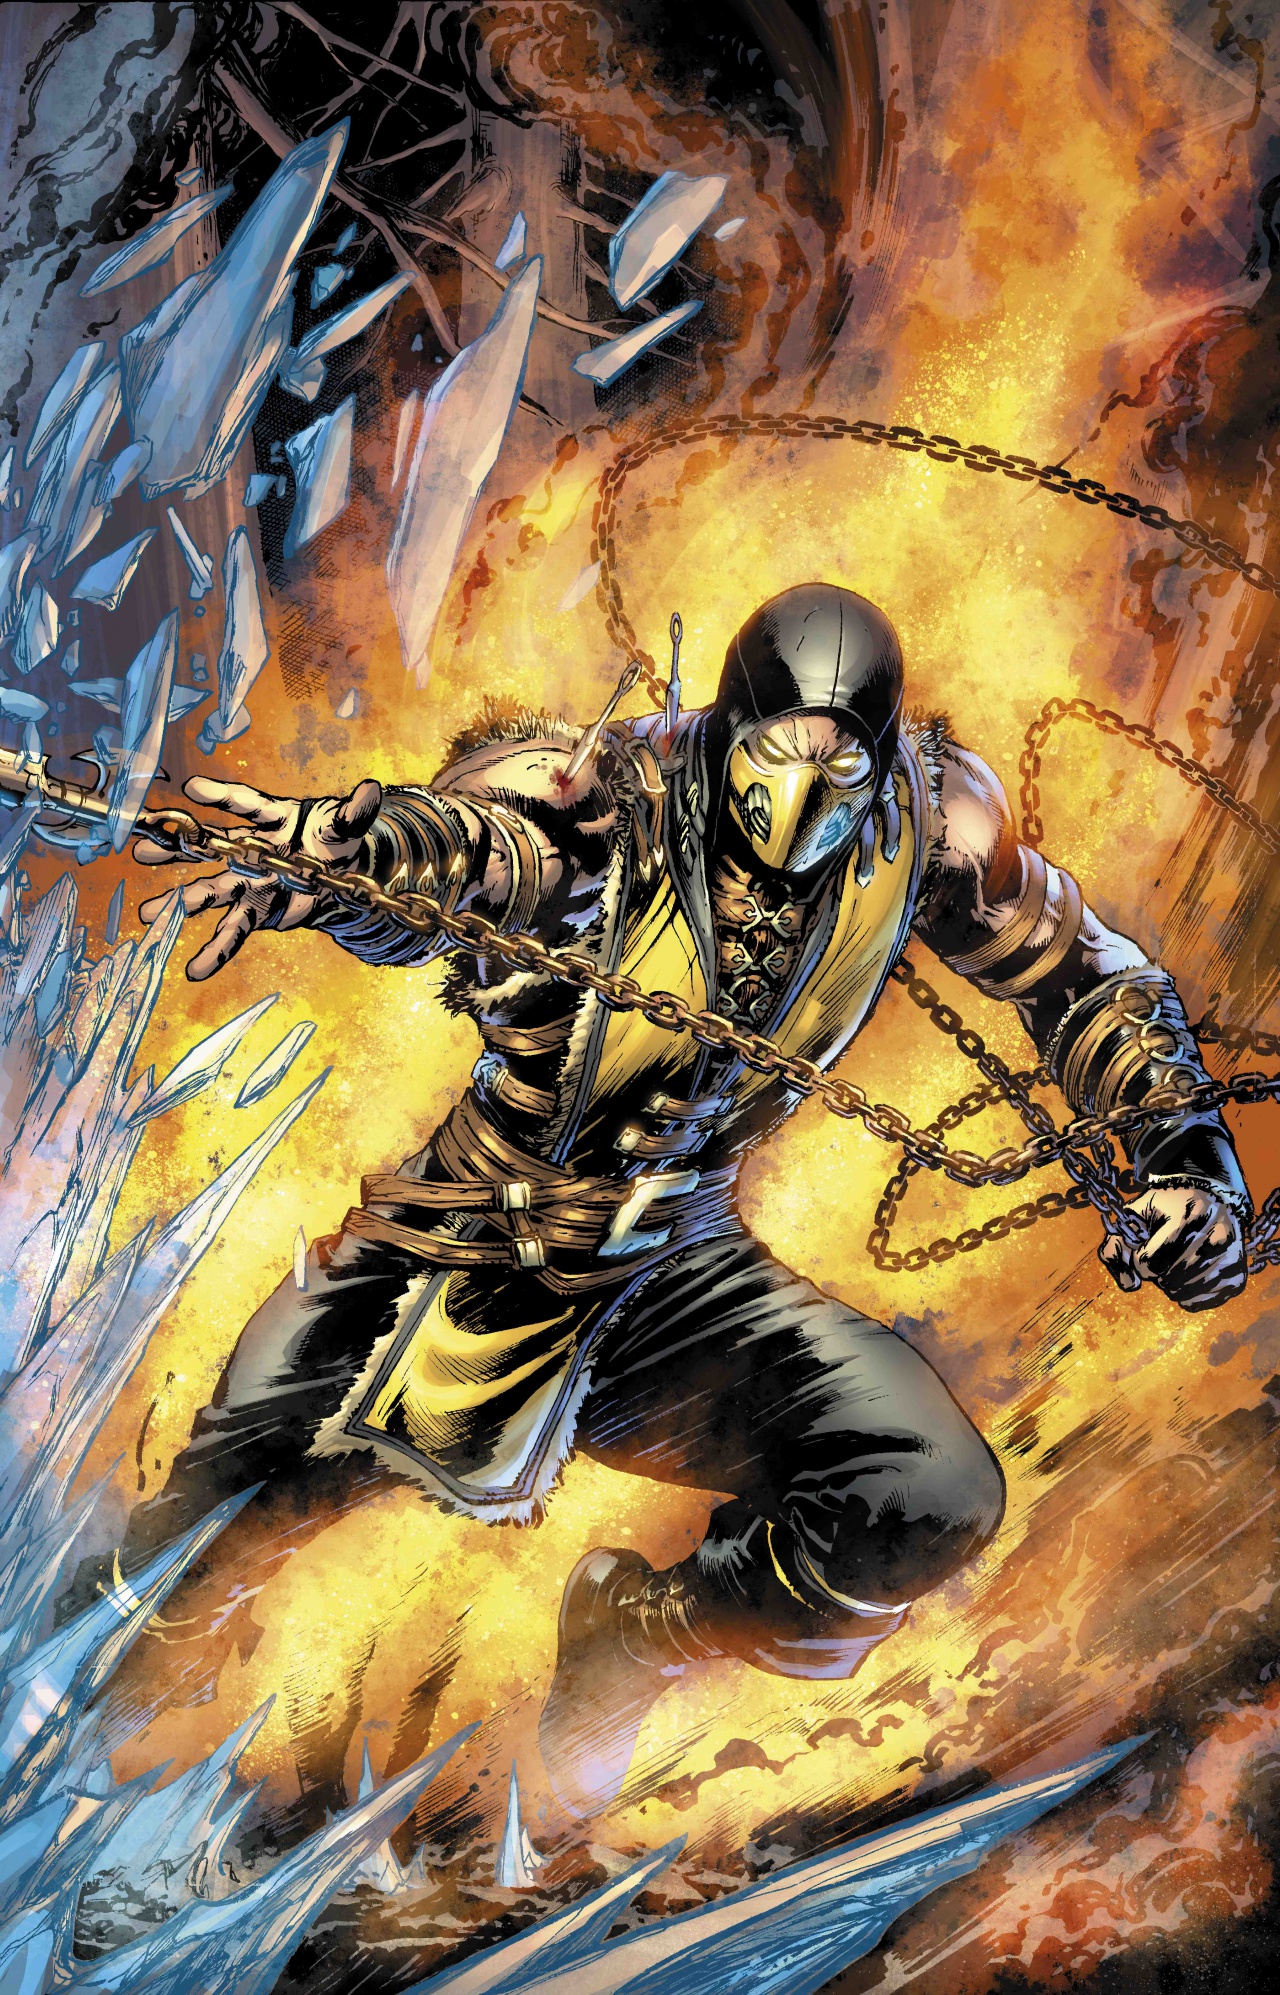 Mortal Kombat X | Video Game Reviews and Previews PC, PS4 ...